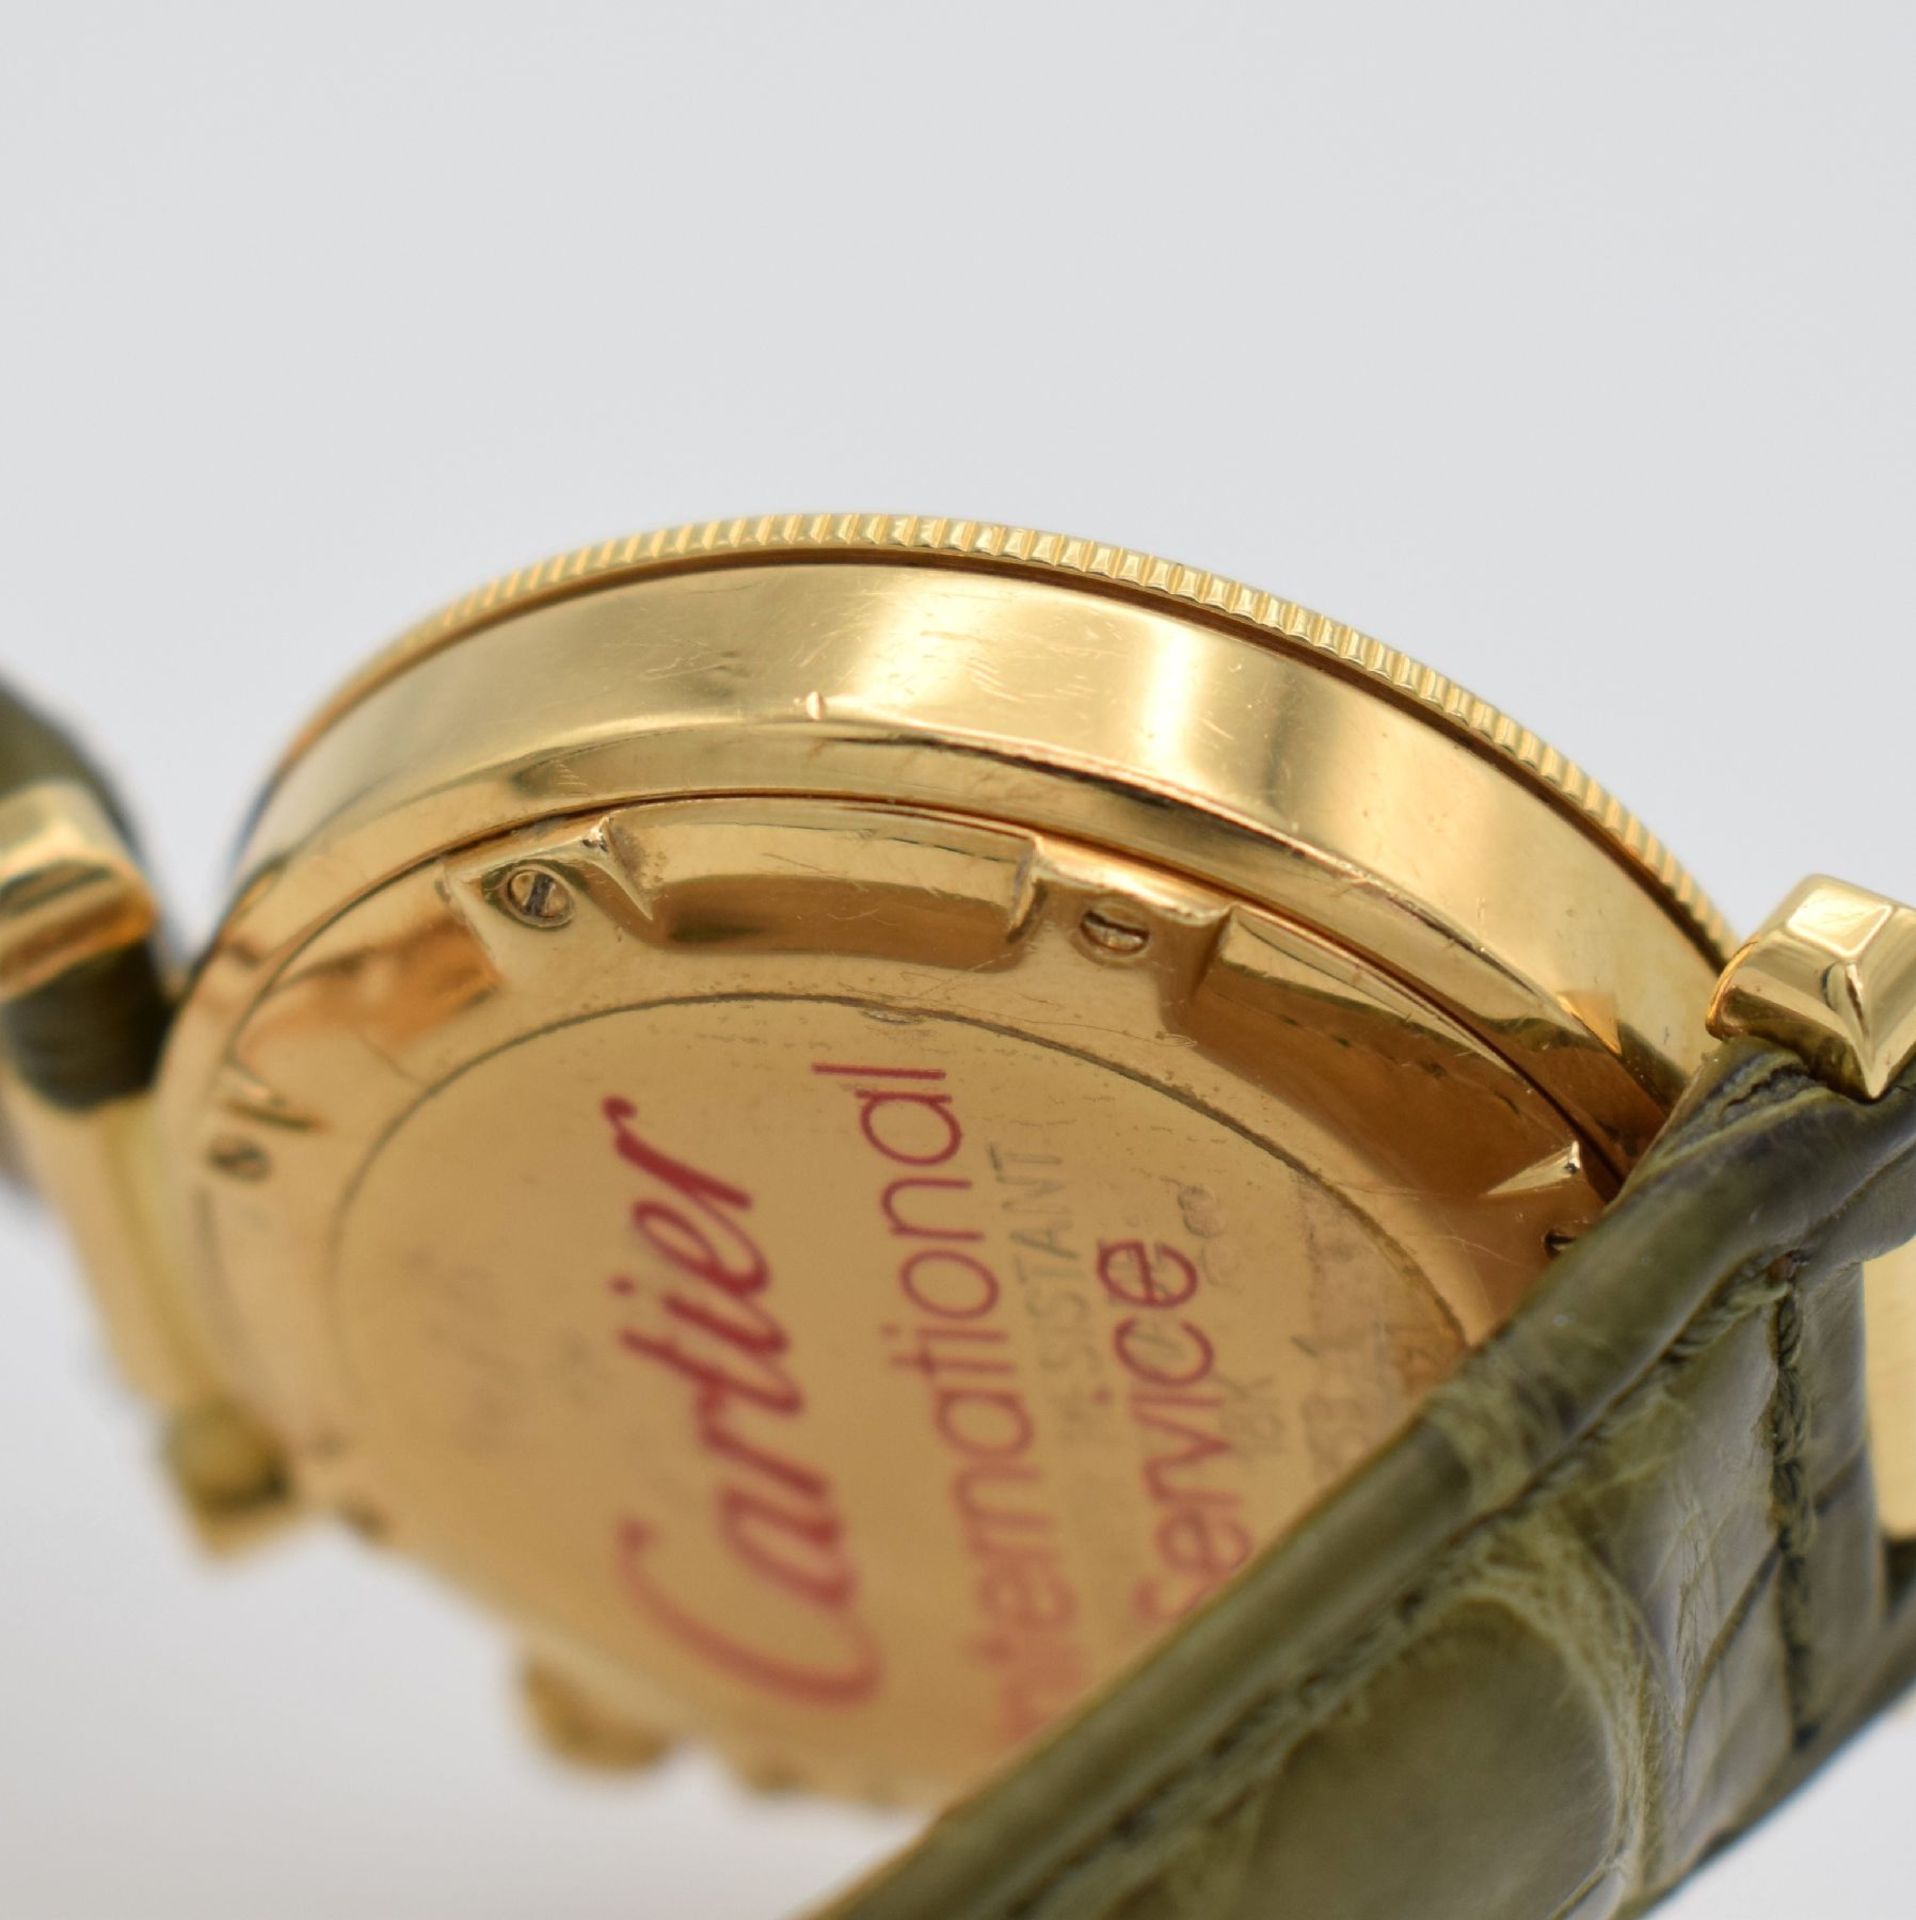 CARTIER Armbandchronograph Serie Pasha in GG 750/000, Schweiz um 2000, Ref. 1353.1, quarz, - Bild 9 aus 9